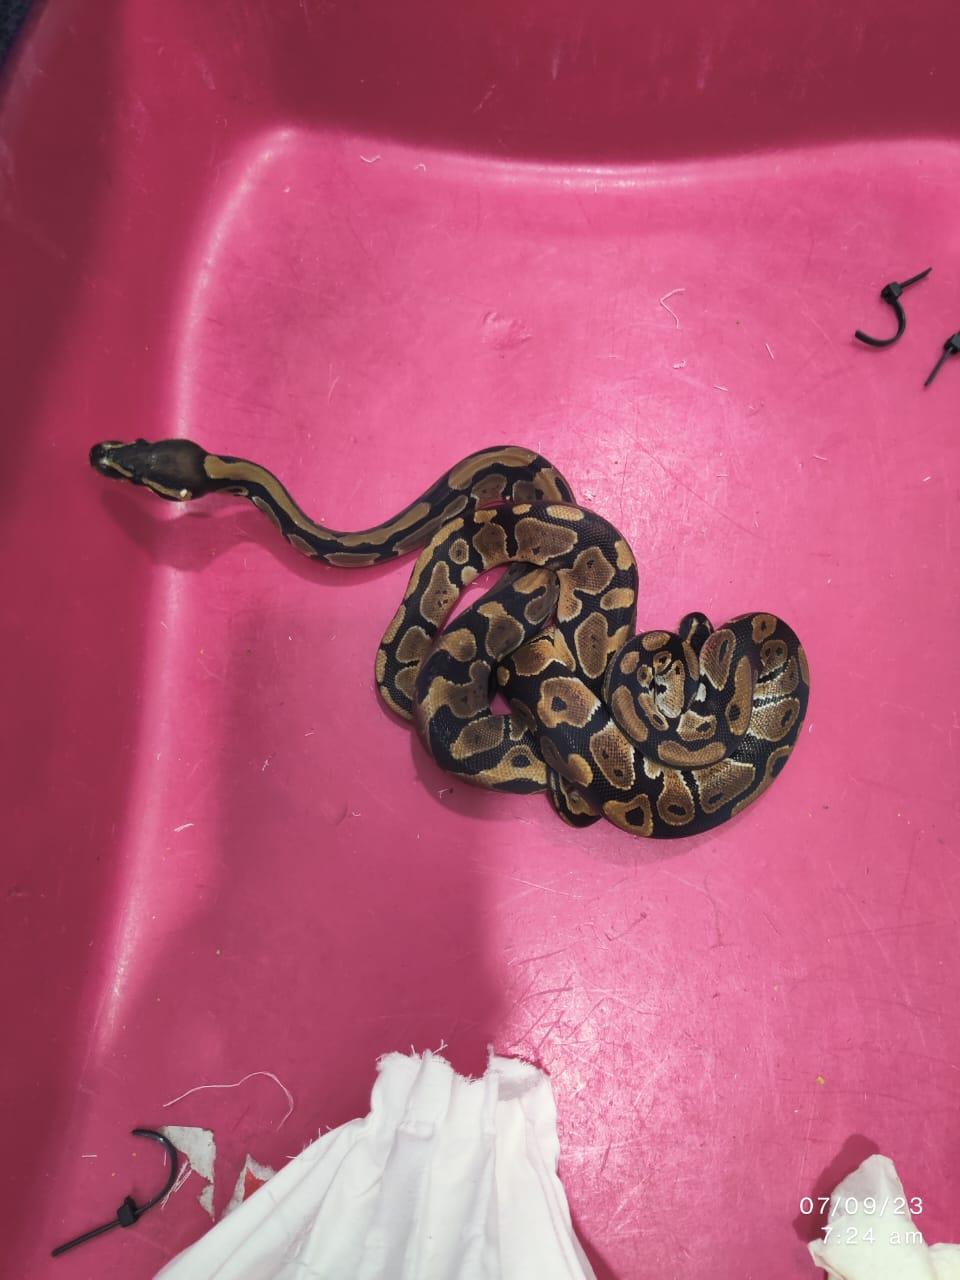 72 snakes, including 17 king cobras, stuffed inside baggage on Bangkok flight seized at Bengaluru airport